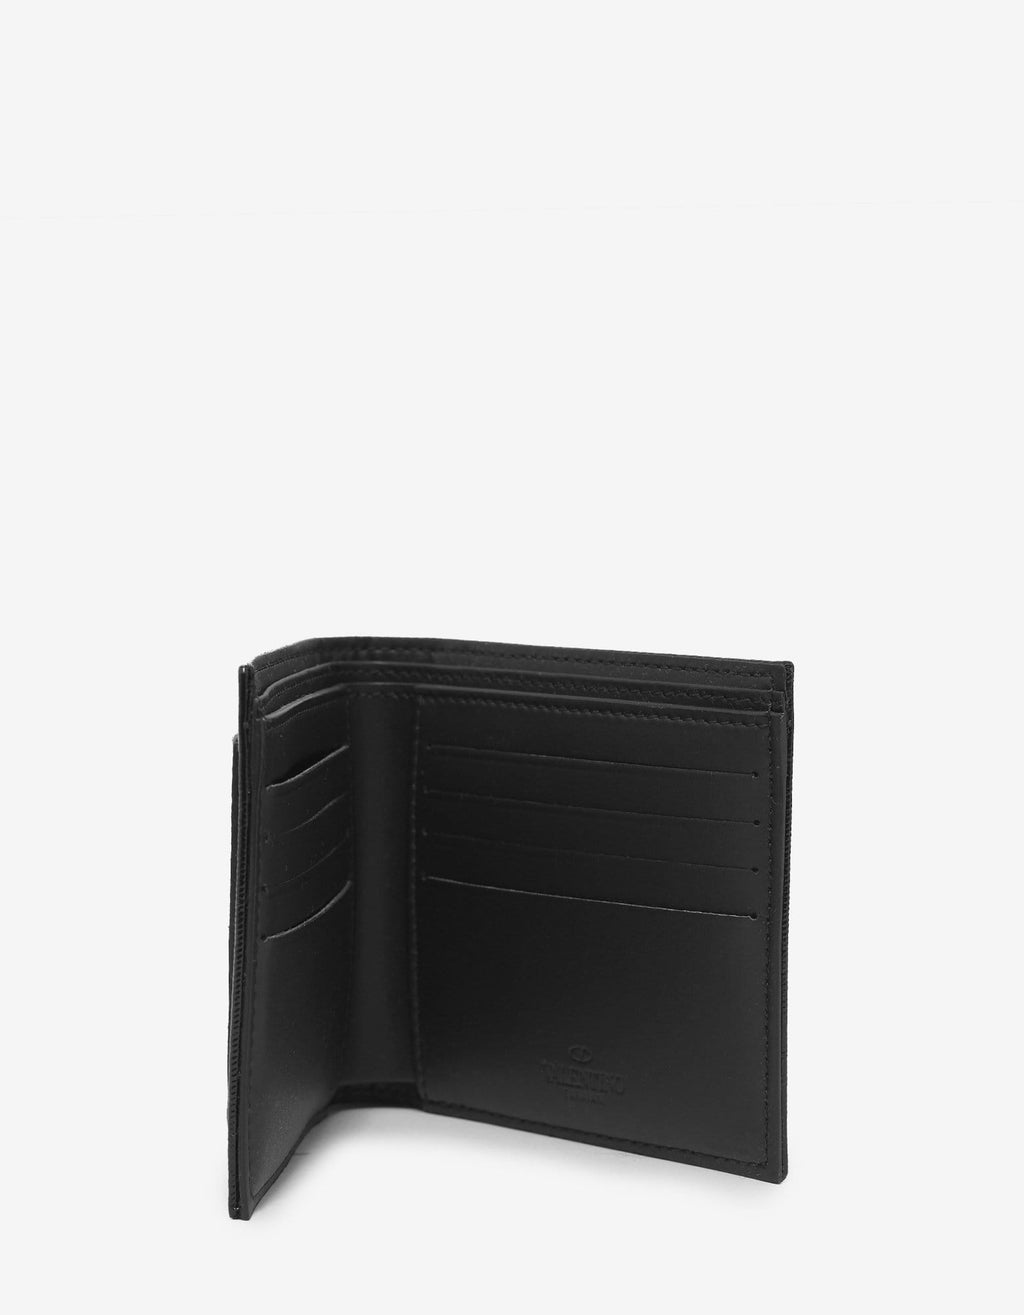 Valentino Garavani Black Patent Leather VLTN Billfold Wallet